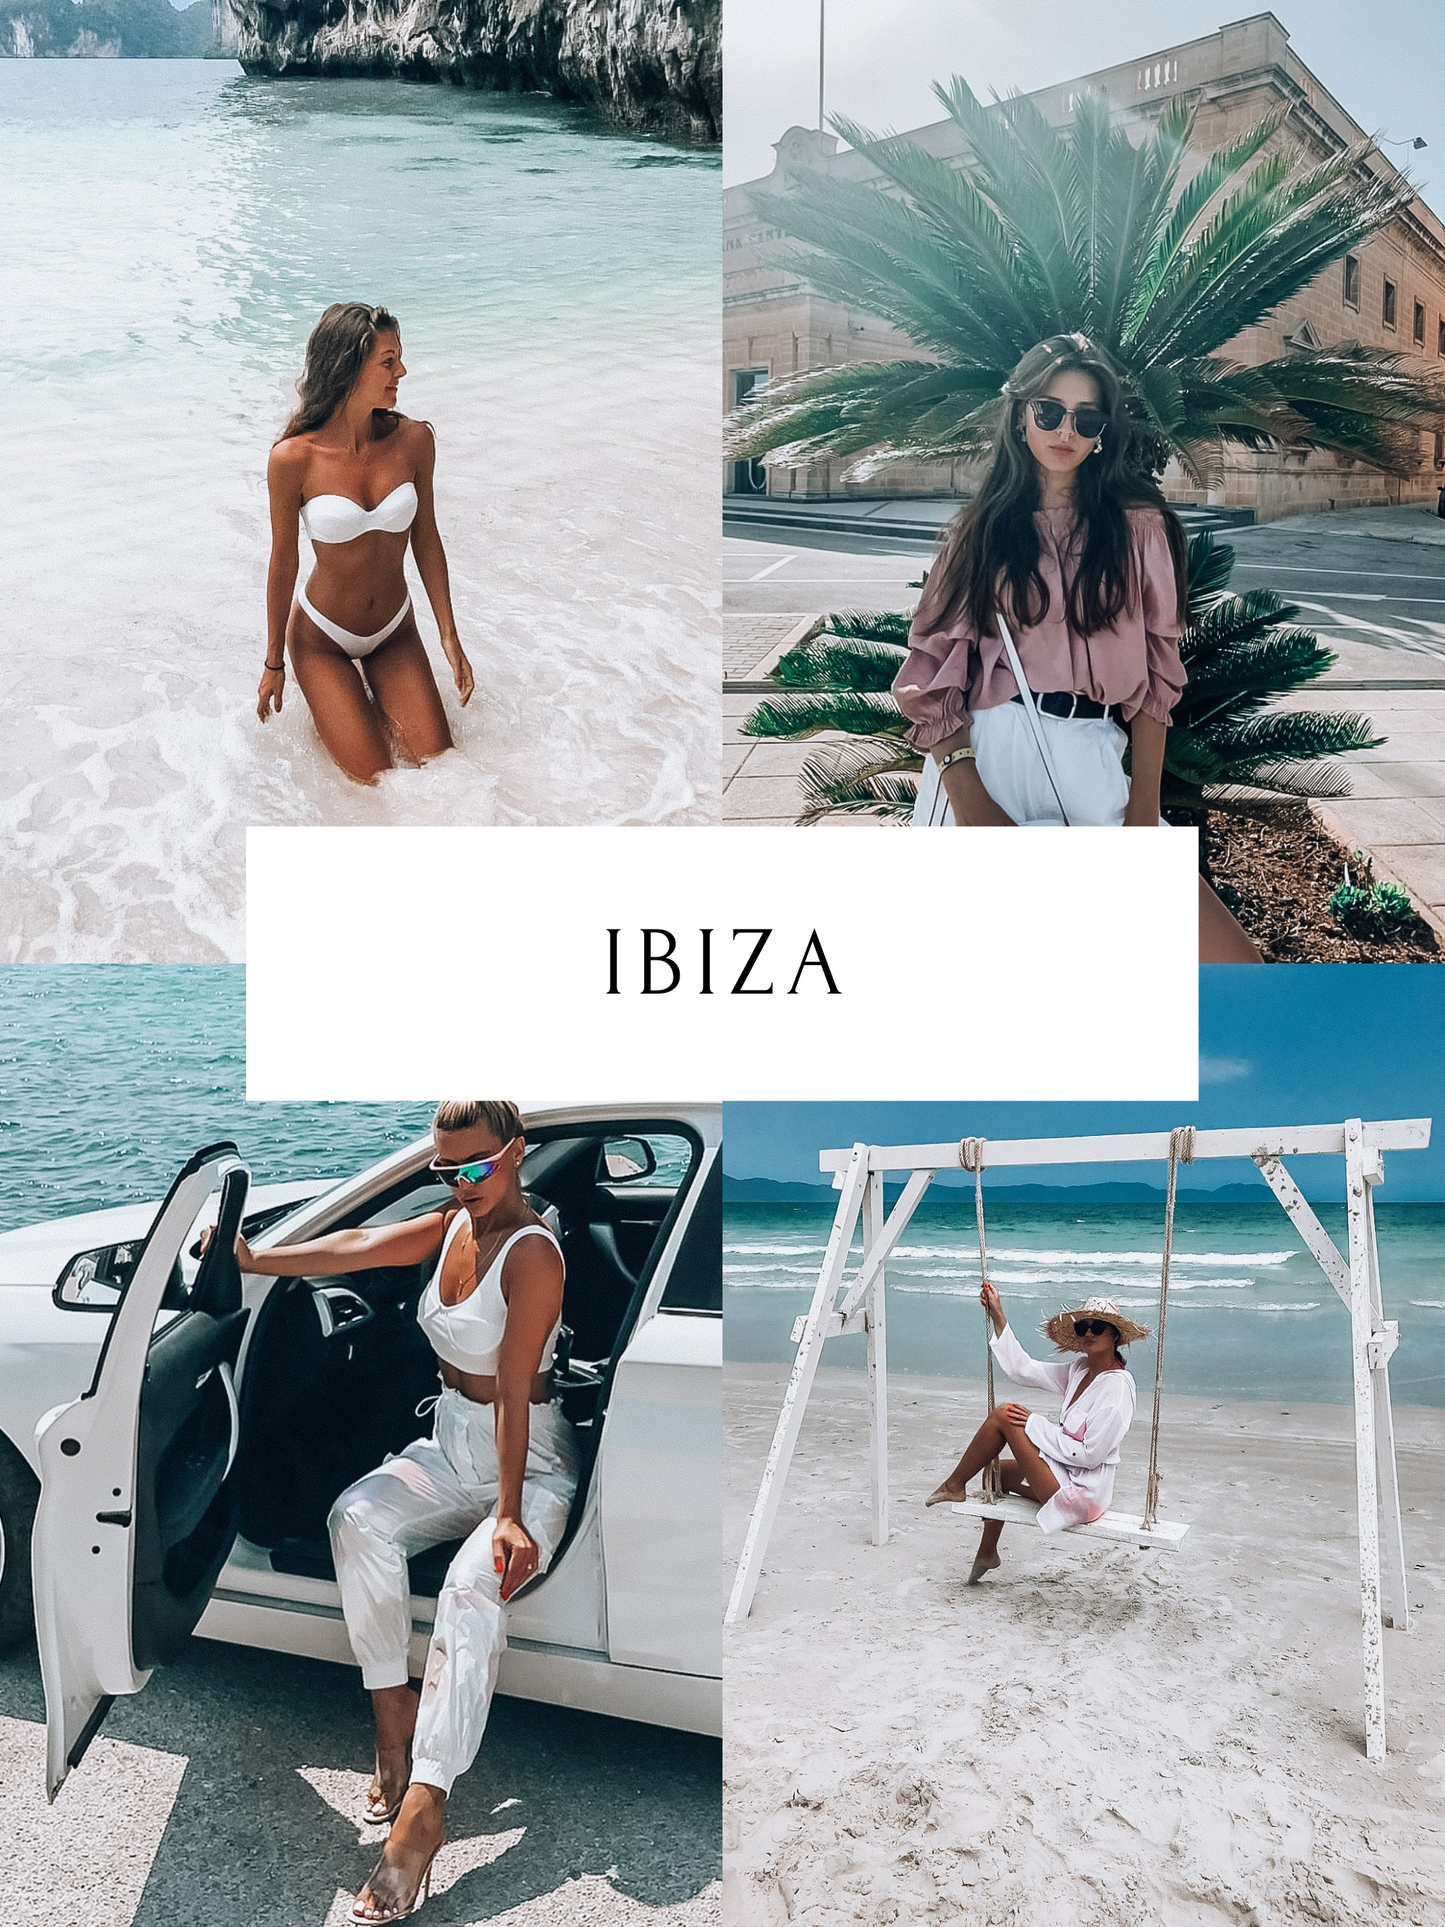 Ibiza - One Click Filter